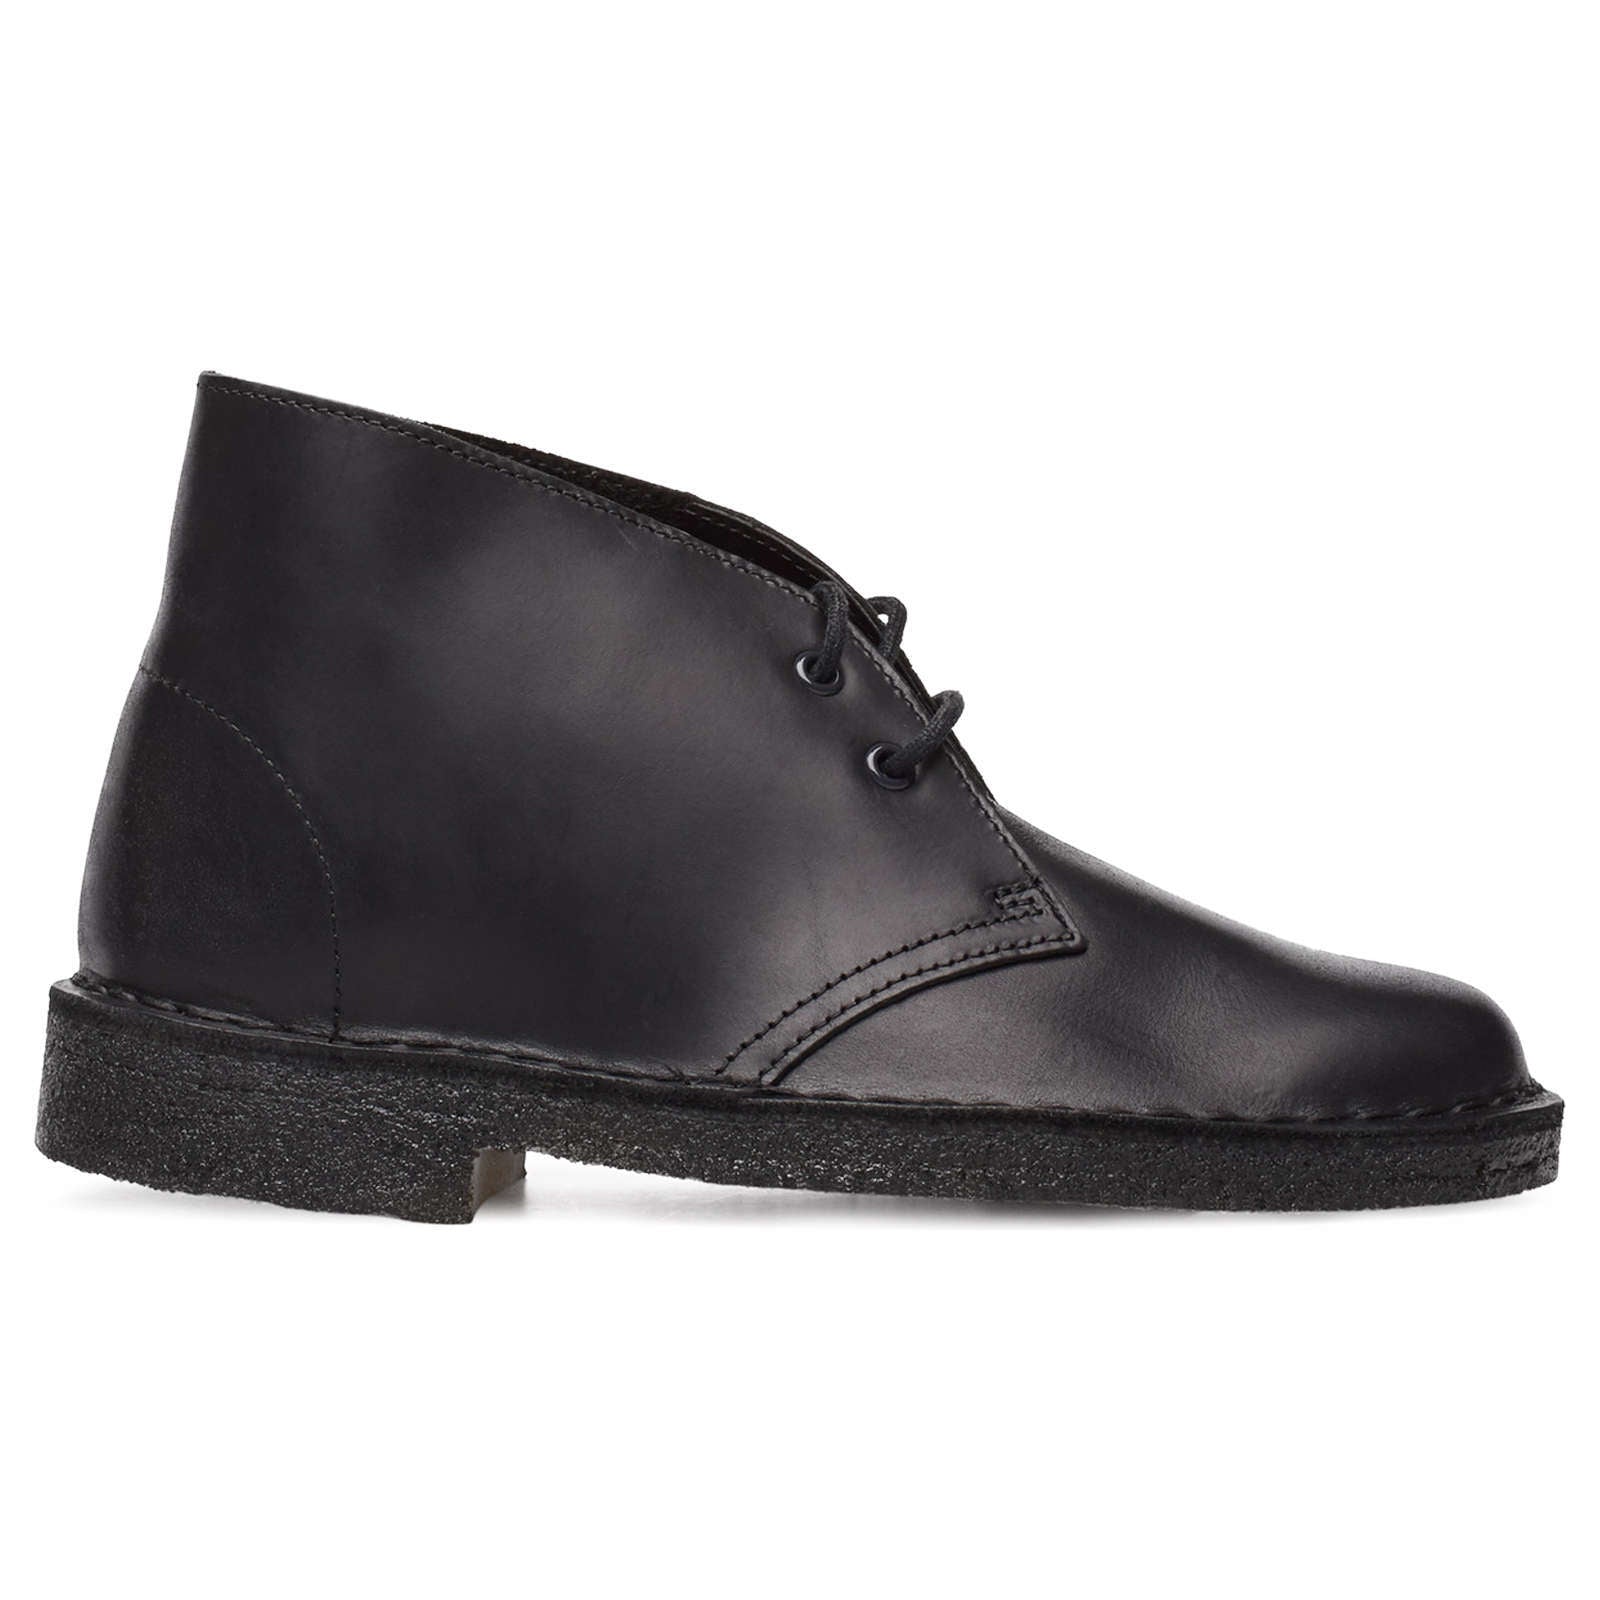 Clarks Originals Desert Boot Leather Women's Boots#color_black polished